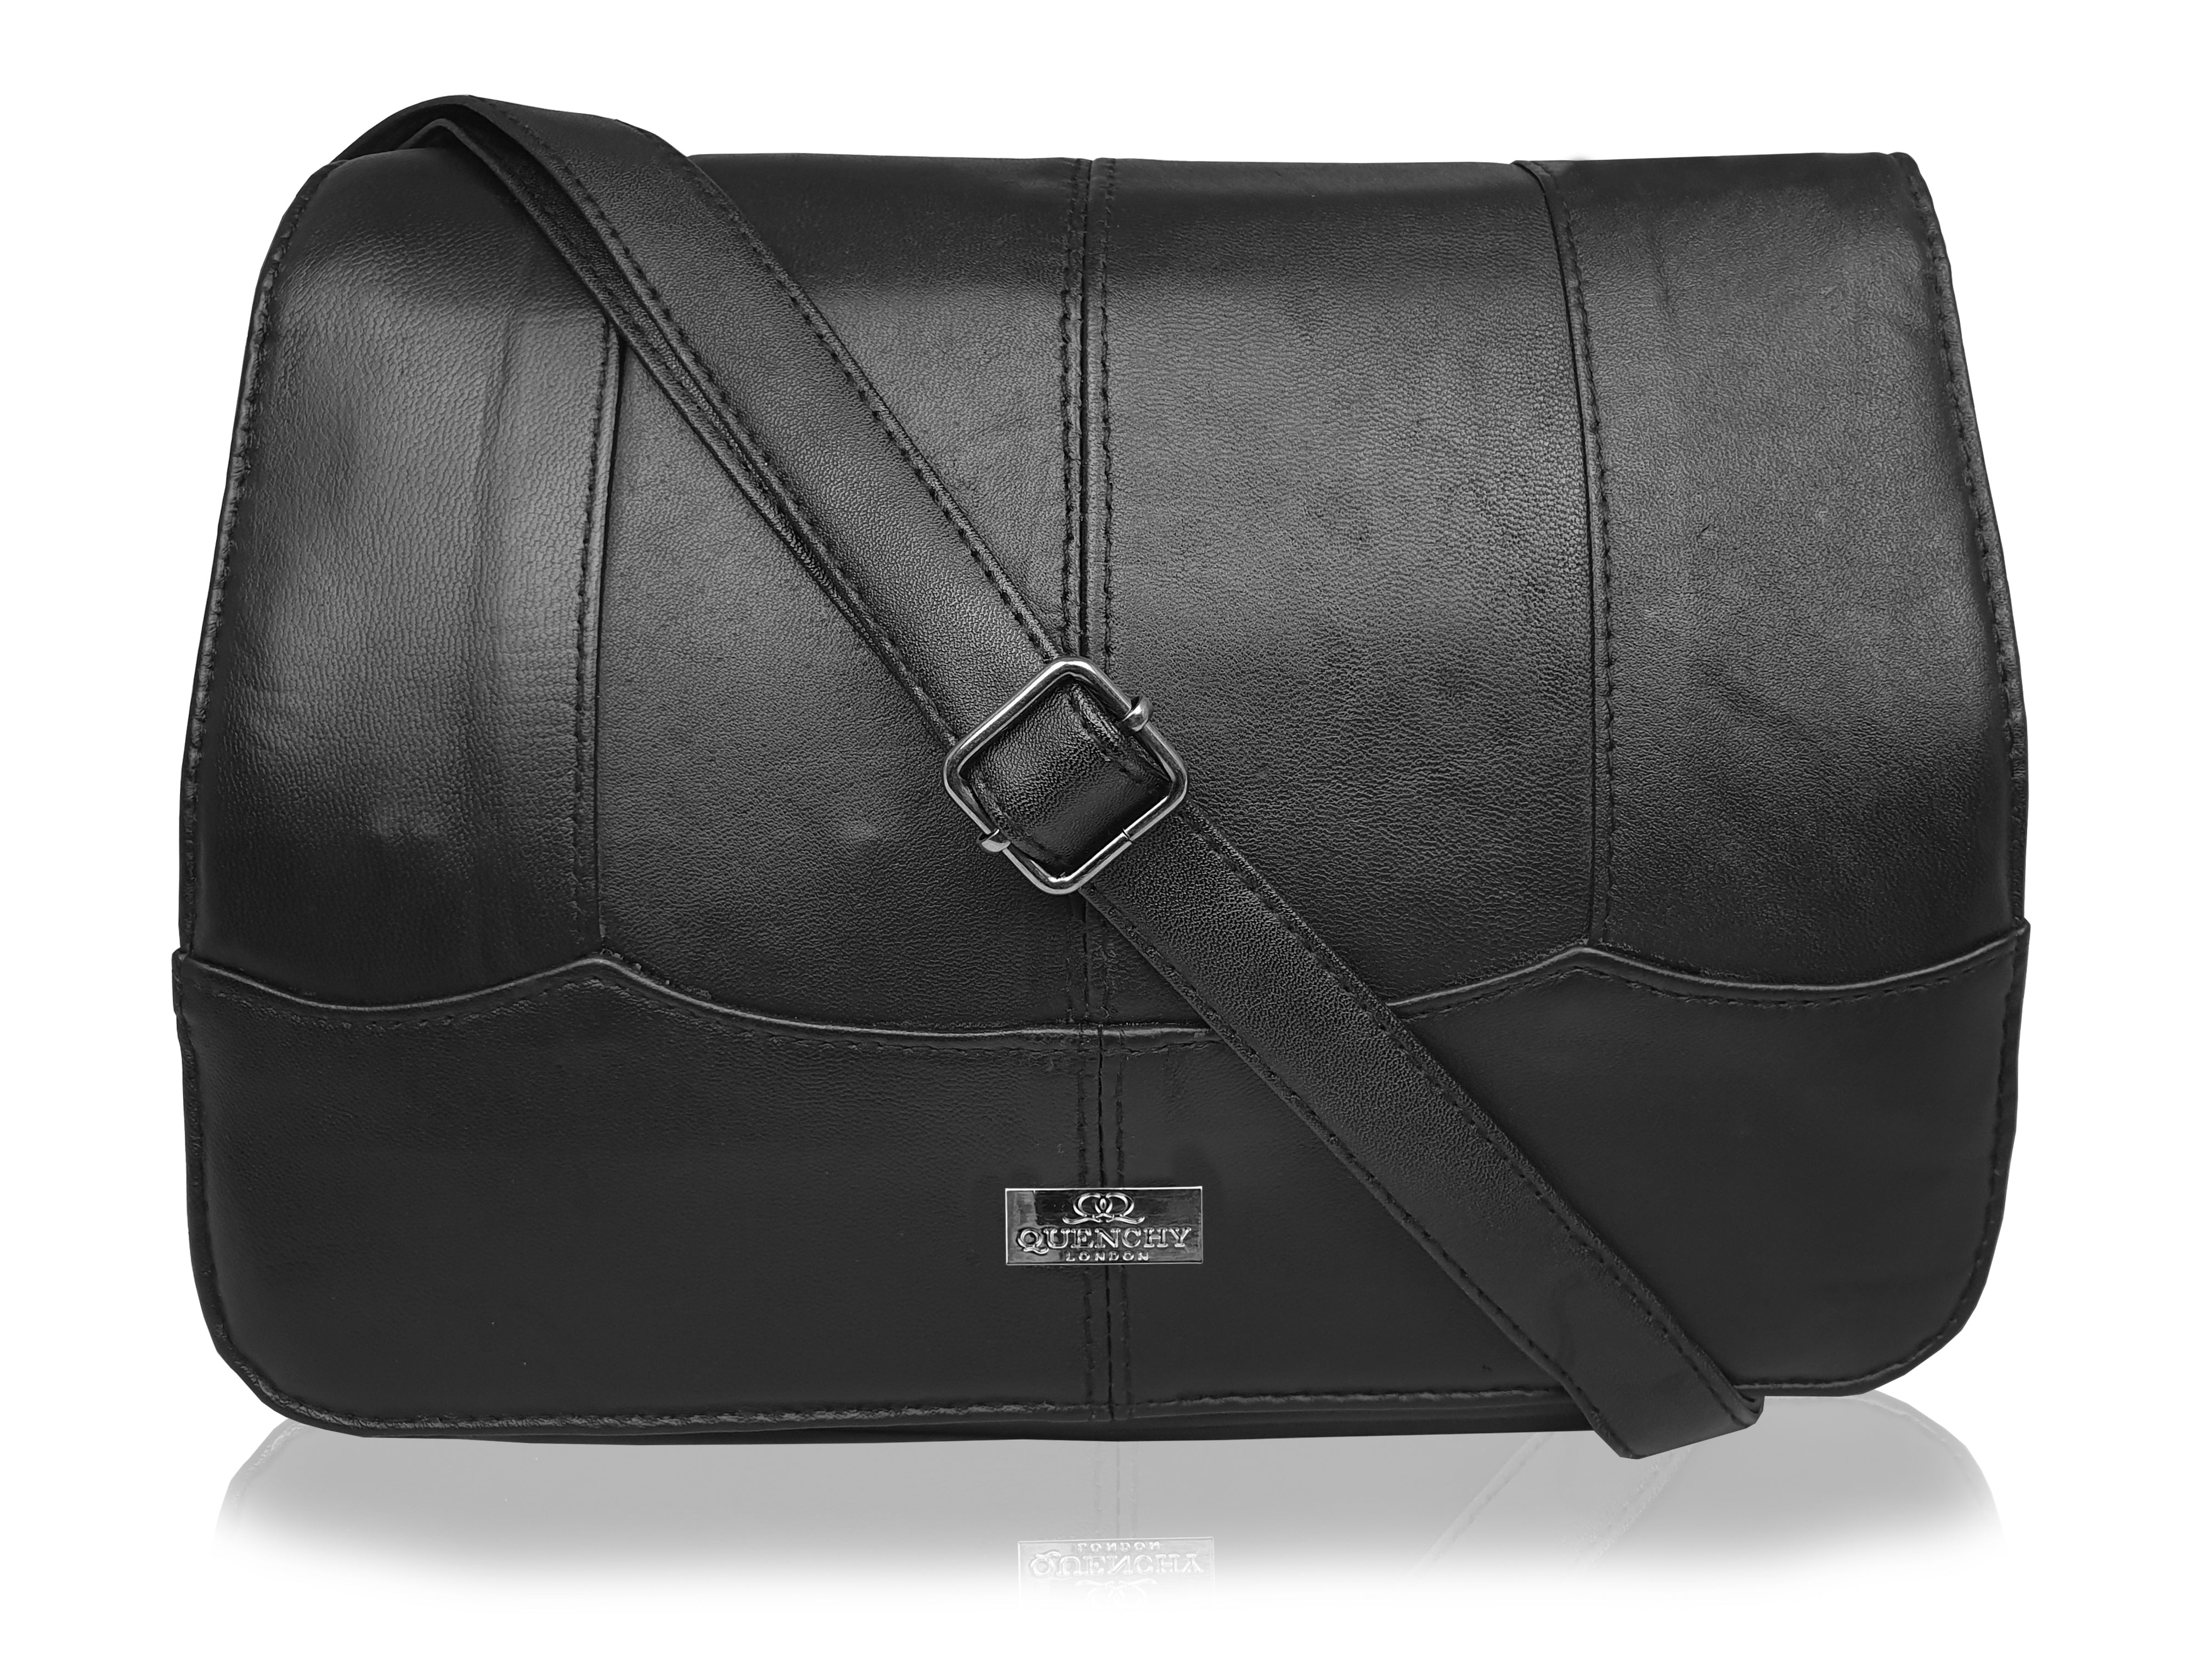 Real Leather Ladies Handbag - Women's Cross Body Black Shoulder Bag - 7Bags